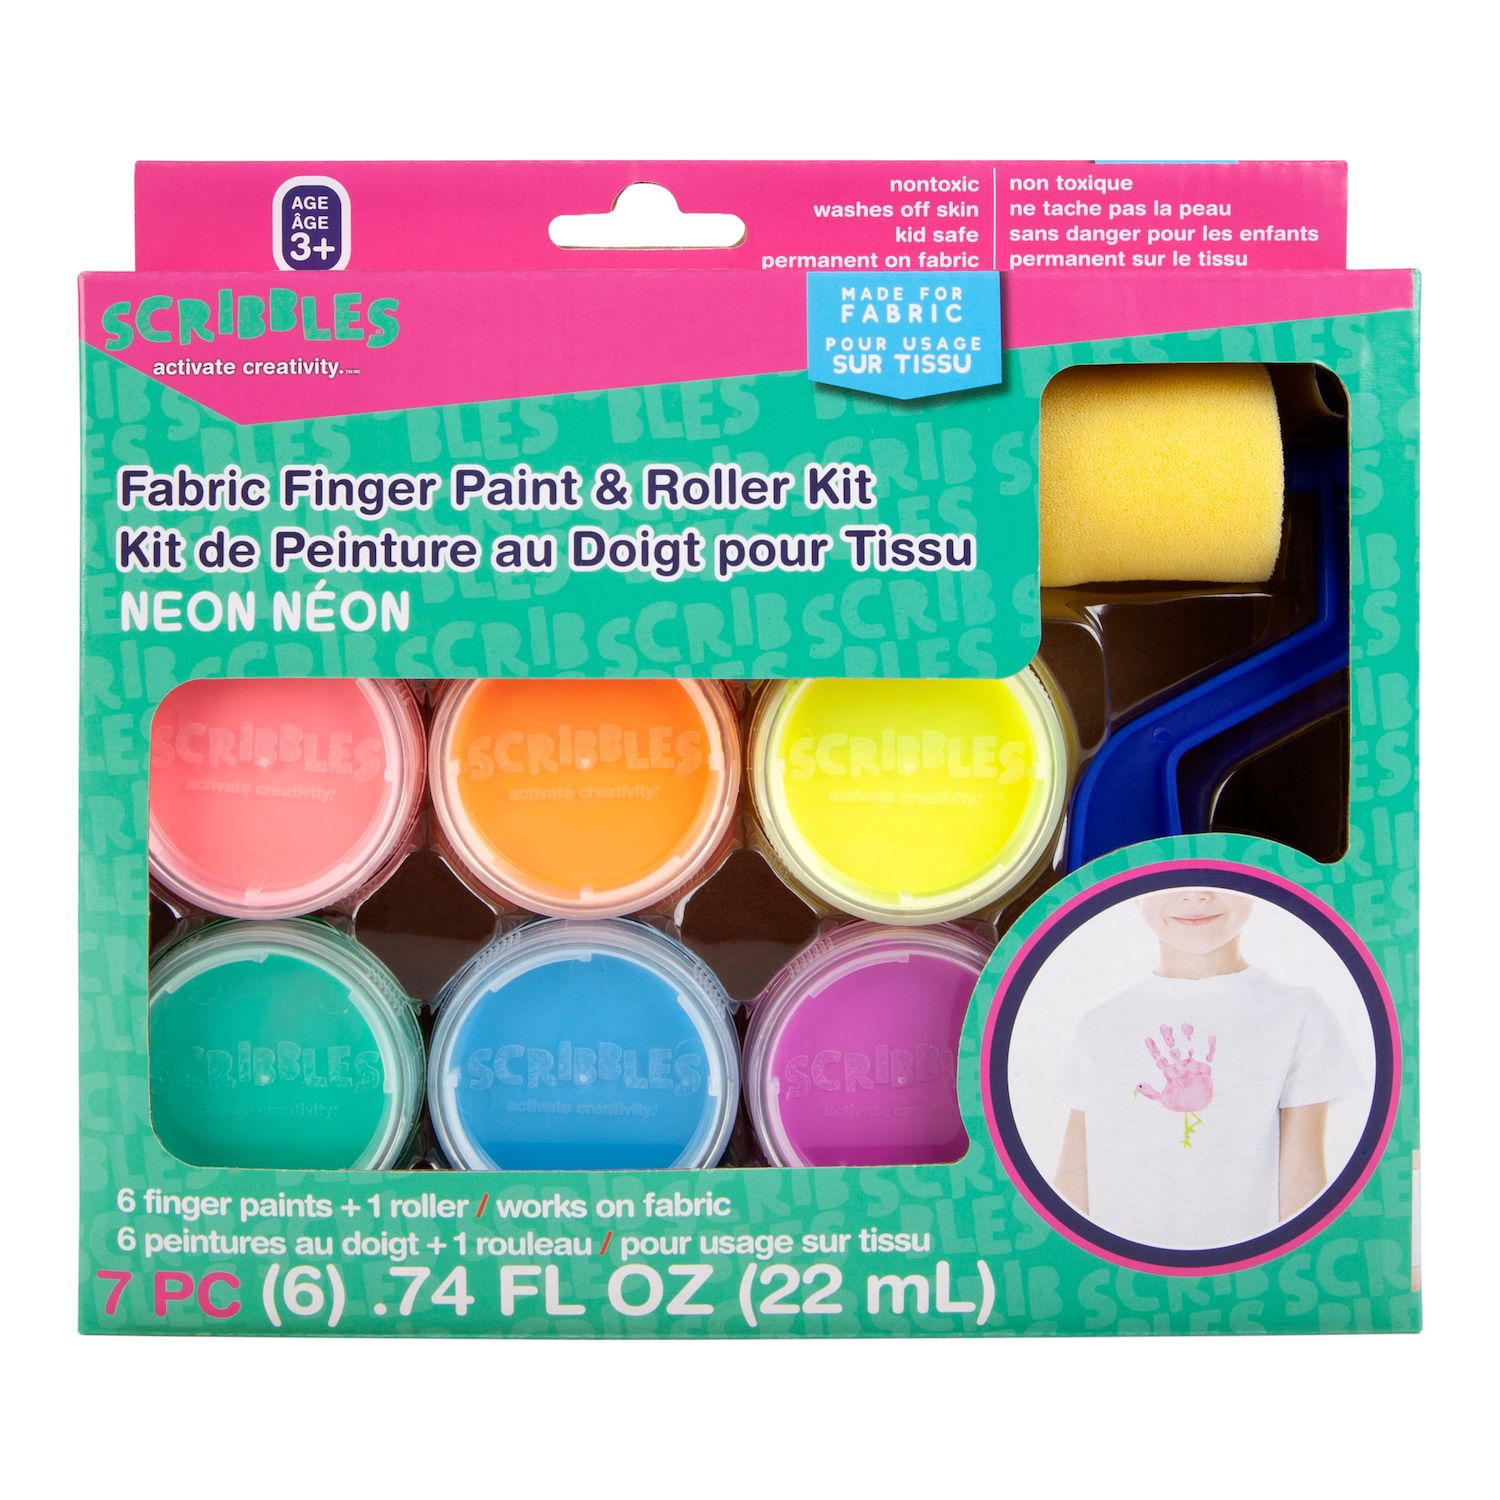 Crayola Bathtub Finger Paint Soap Body Wash - 3 oz - Bright Neon Colors 4  PACK